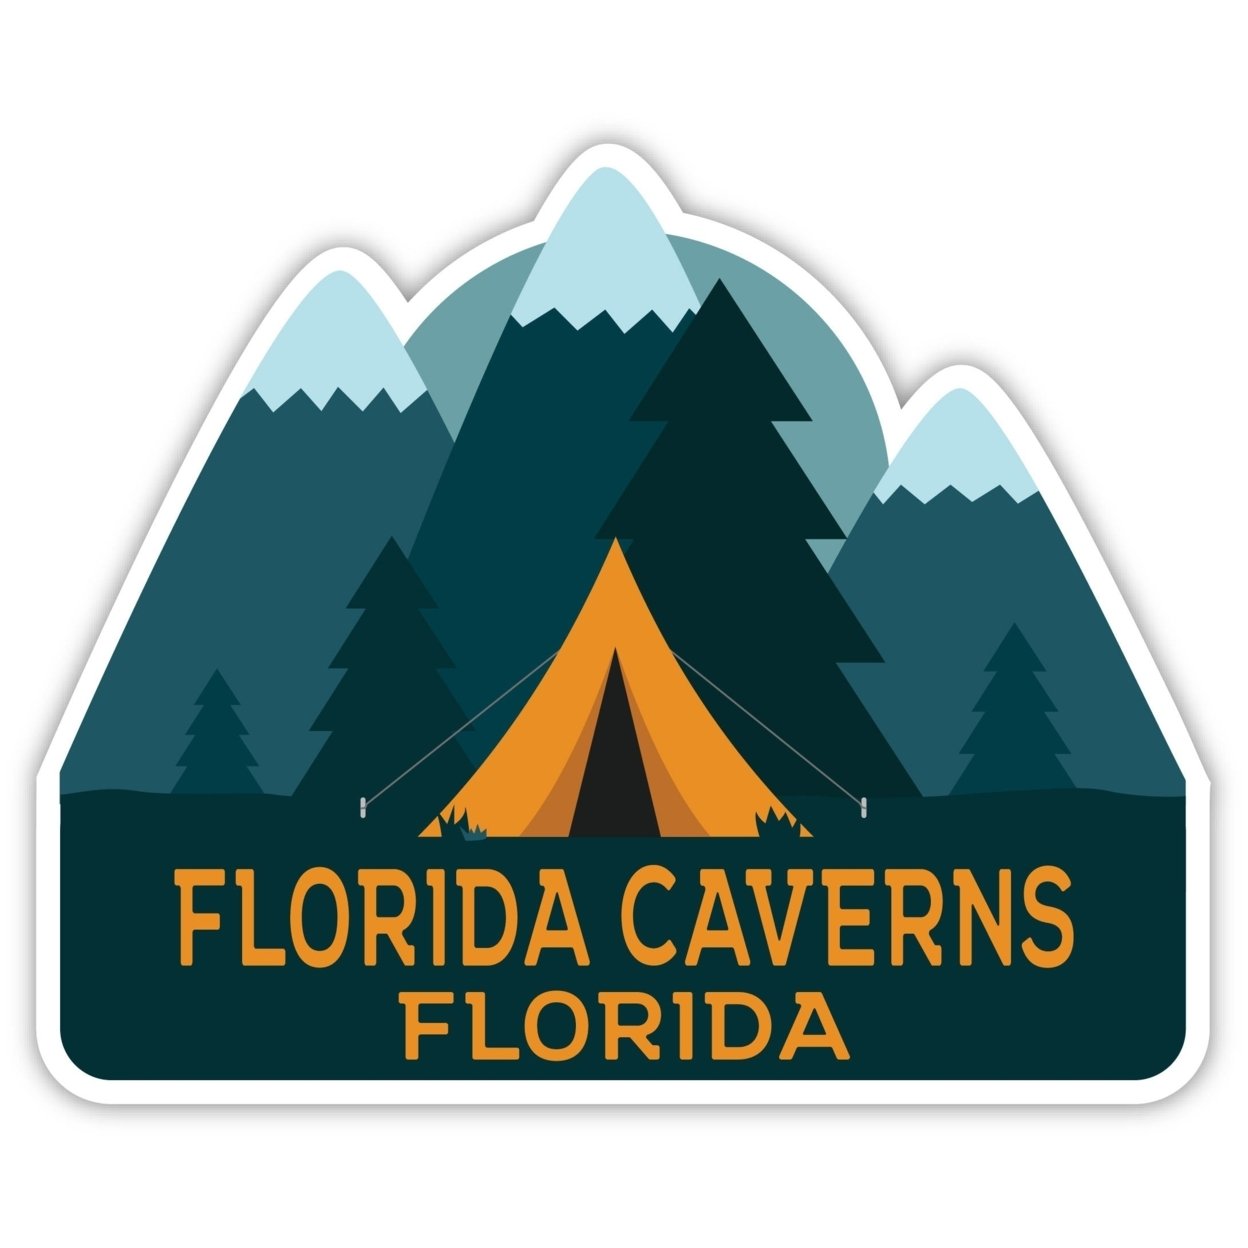 Florida Caverns Florida Souvenir Decorative Stickers (Choose Theme And Size) - 4-Pack, 12-Inch, Tent